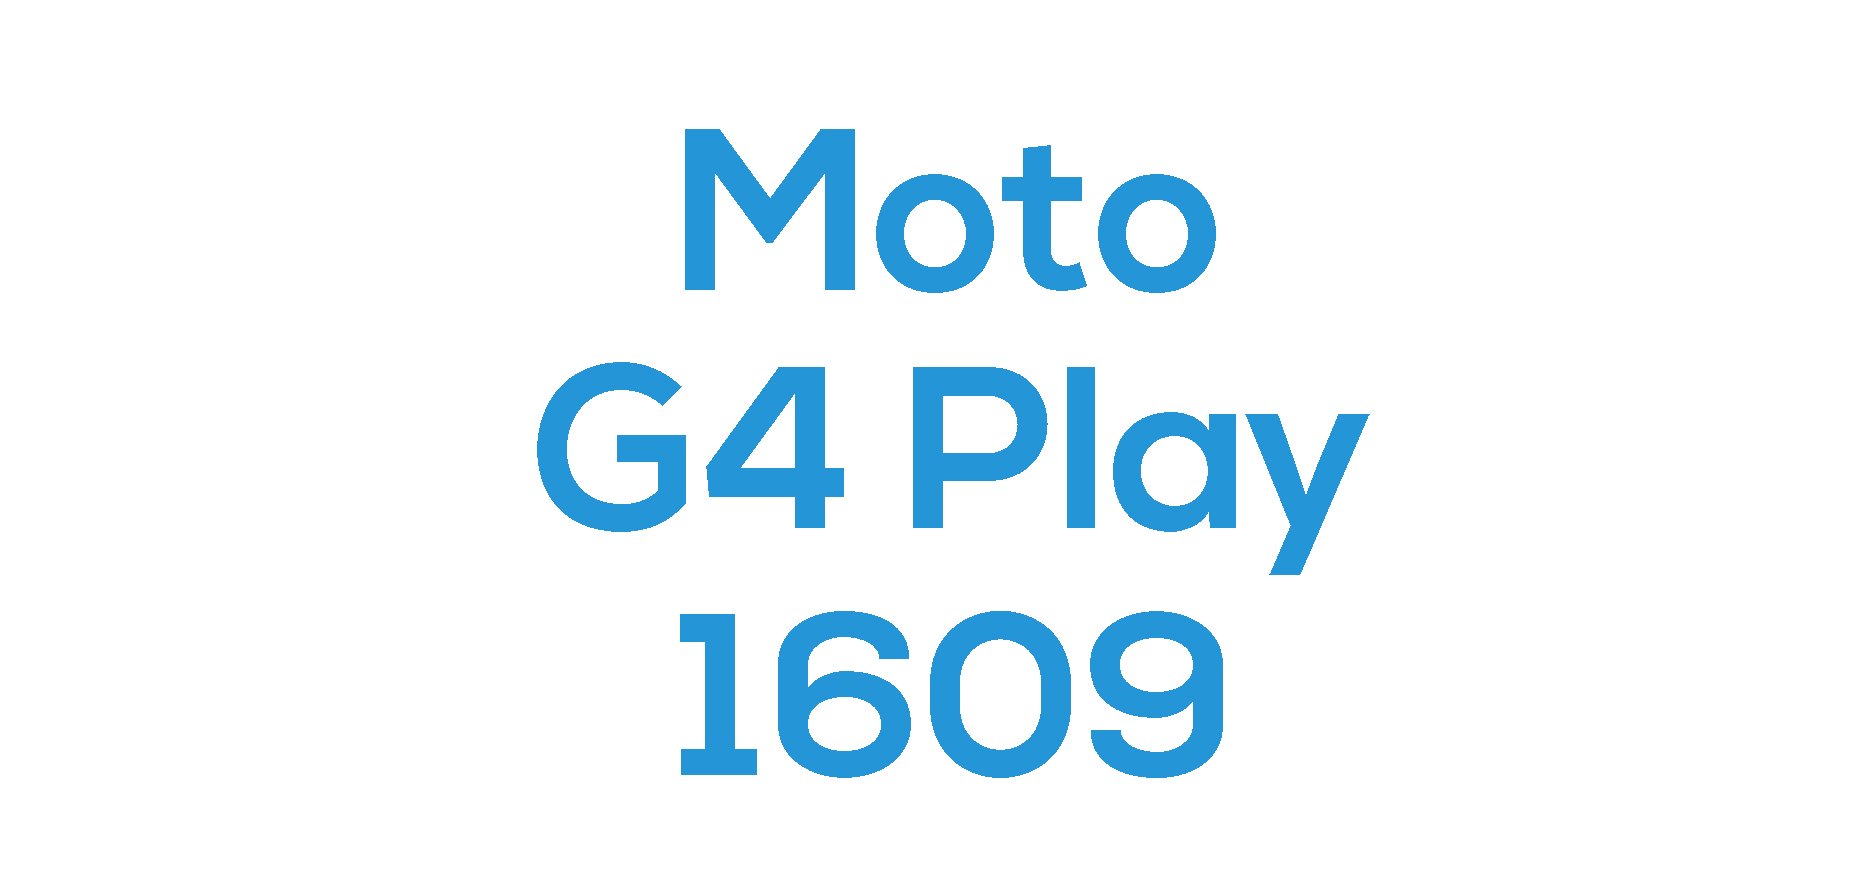 G4 Play 2016 (XT1609)